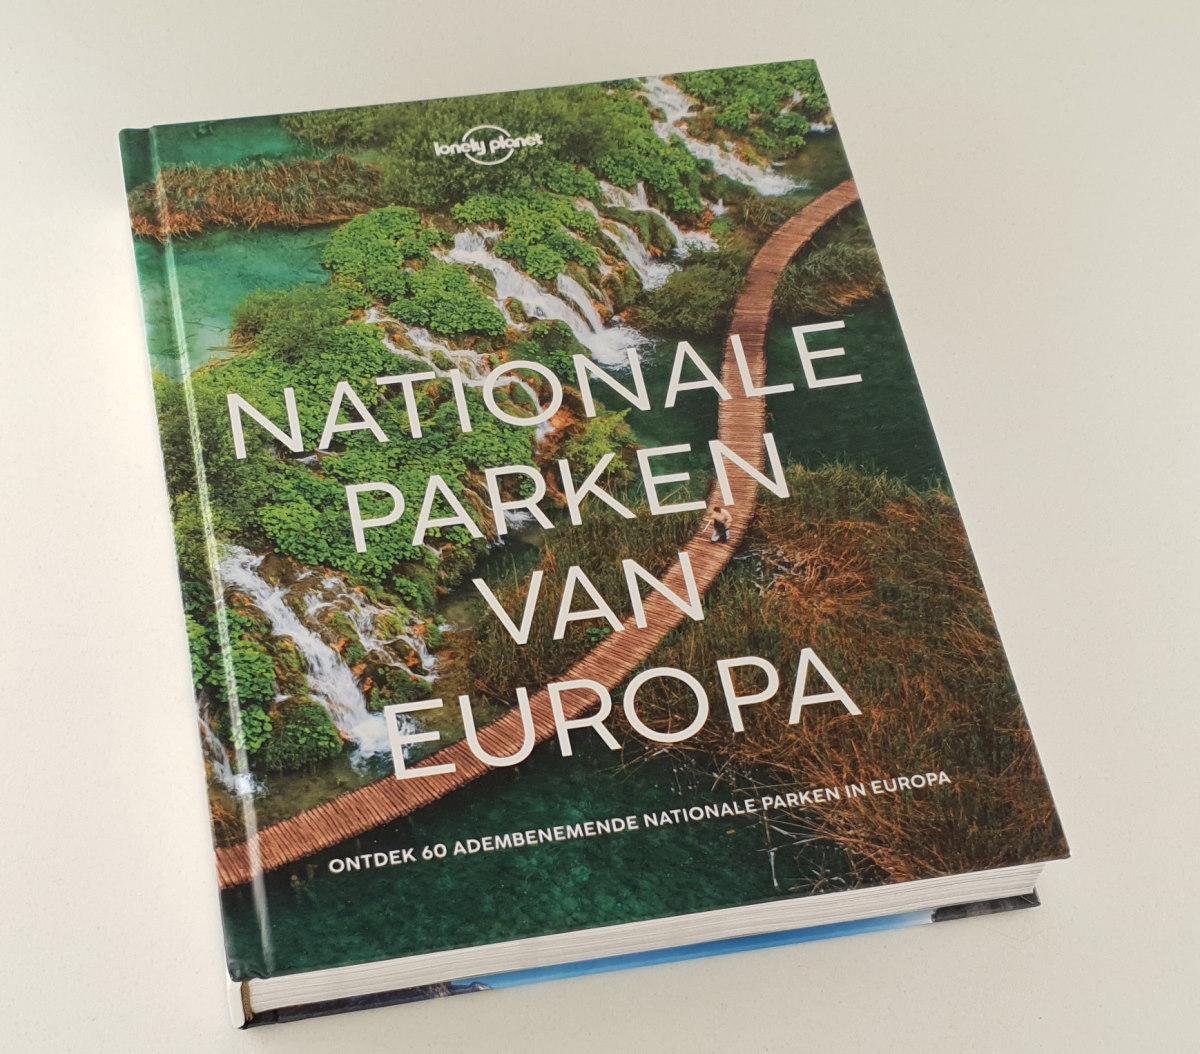 Lonely Planet - Nationale Parken van Europa / Ontdek 60 adembenemende nationale parken in Europa